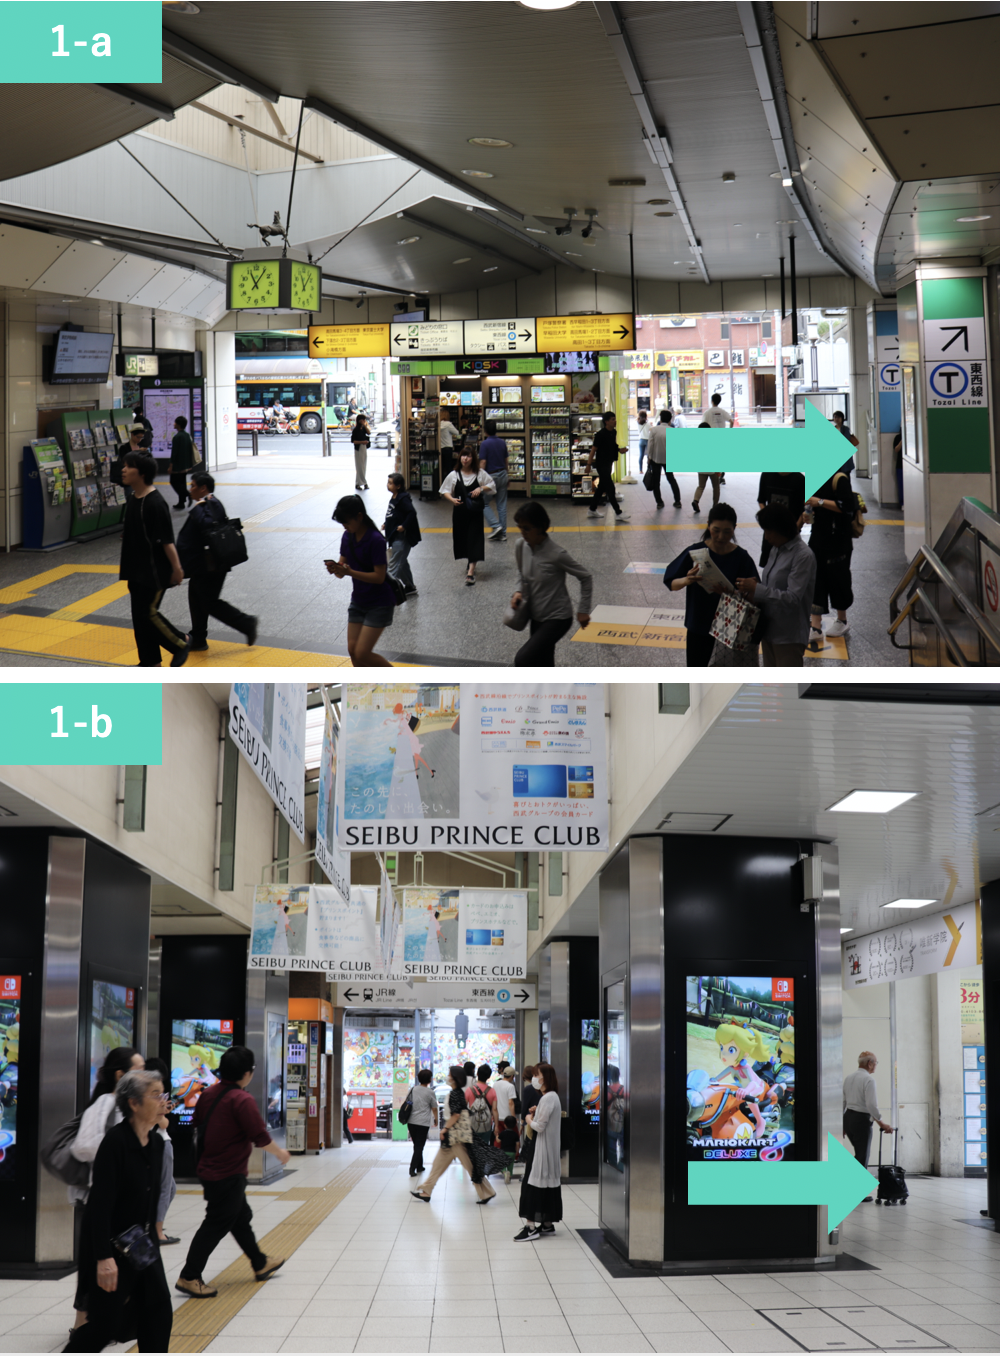 JR山手線から早稲田口の改札口を出て、右側（ロータリー側）にお進み下さい / JR山手線から(1-a)西武新宿線から(1-b)